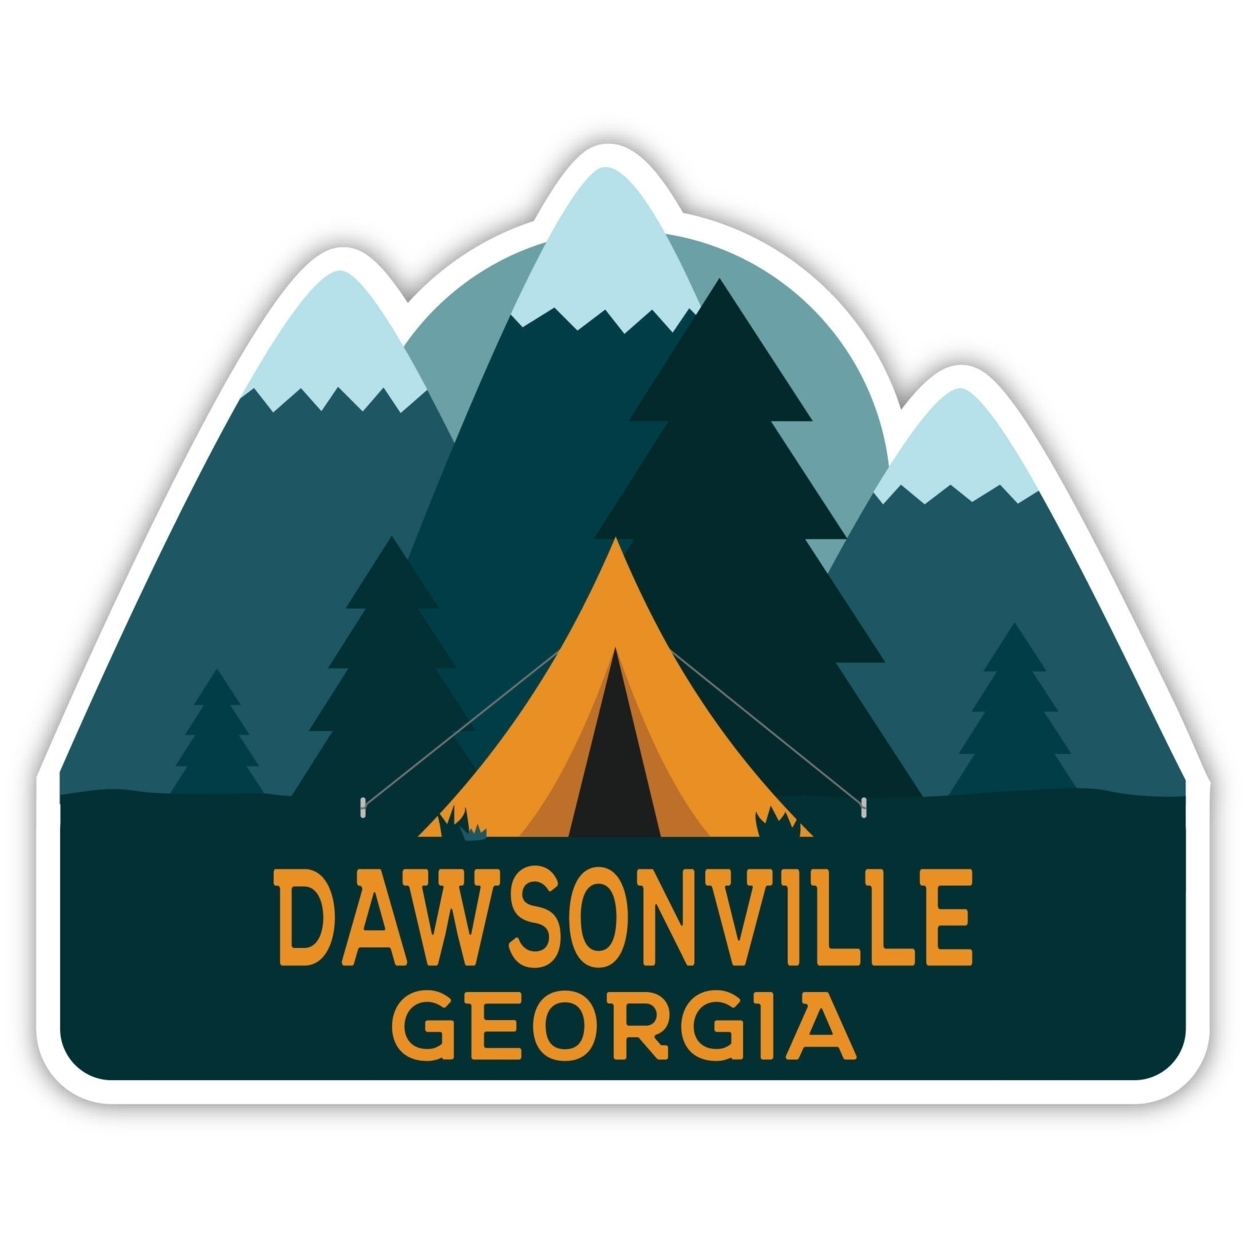 Dawsonville Georgia Souvenir Decorative Stickers (Choose Theme And Size) - 4-Pack, 4-Inch, Tent